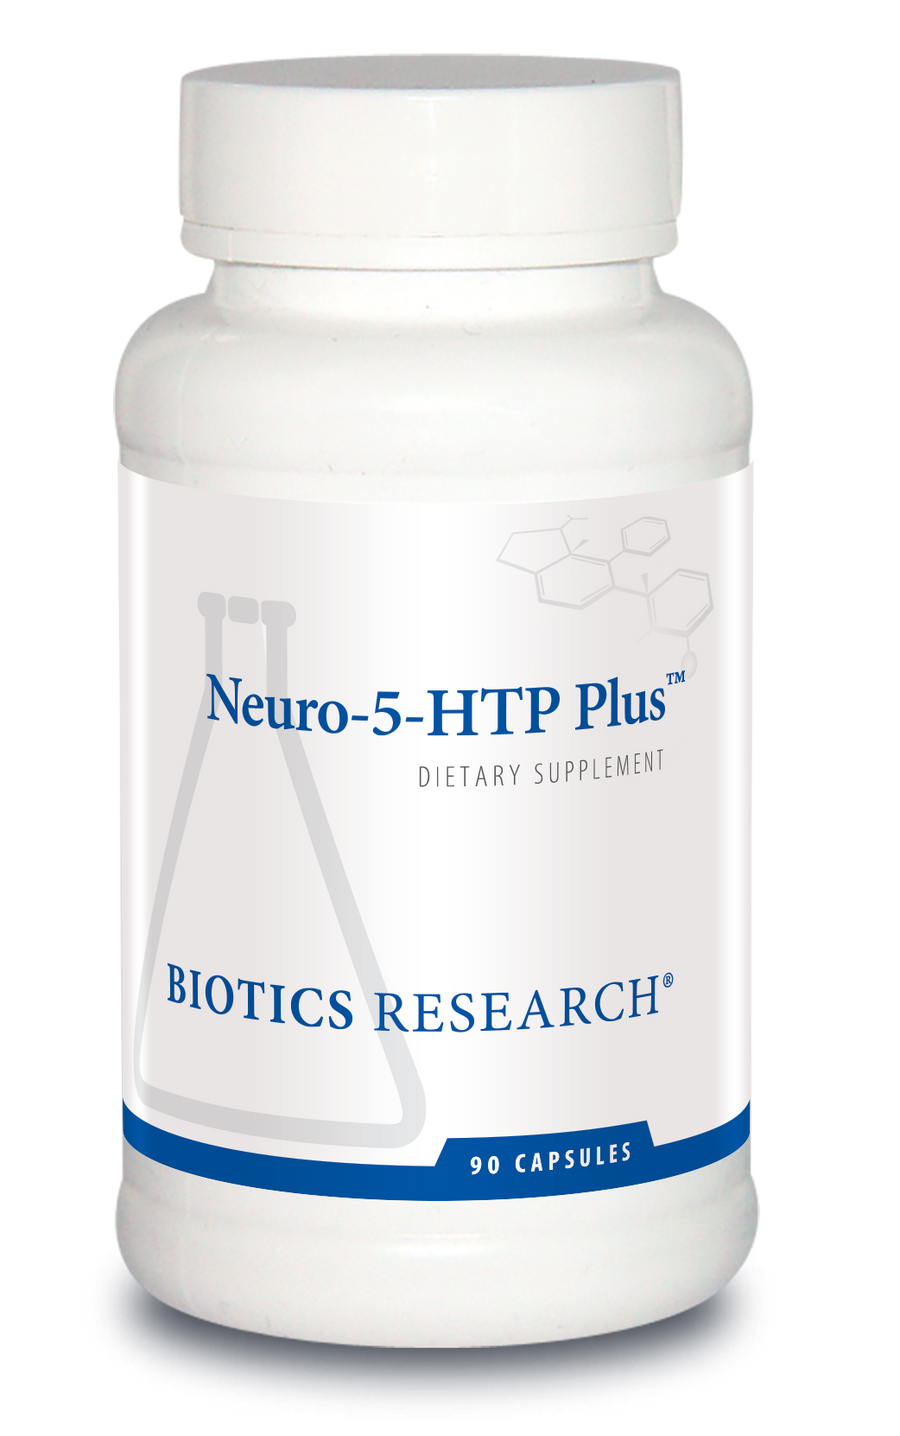 Neuro-5-HTP Plus™